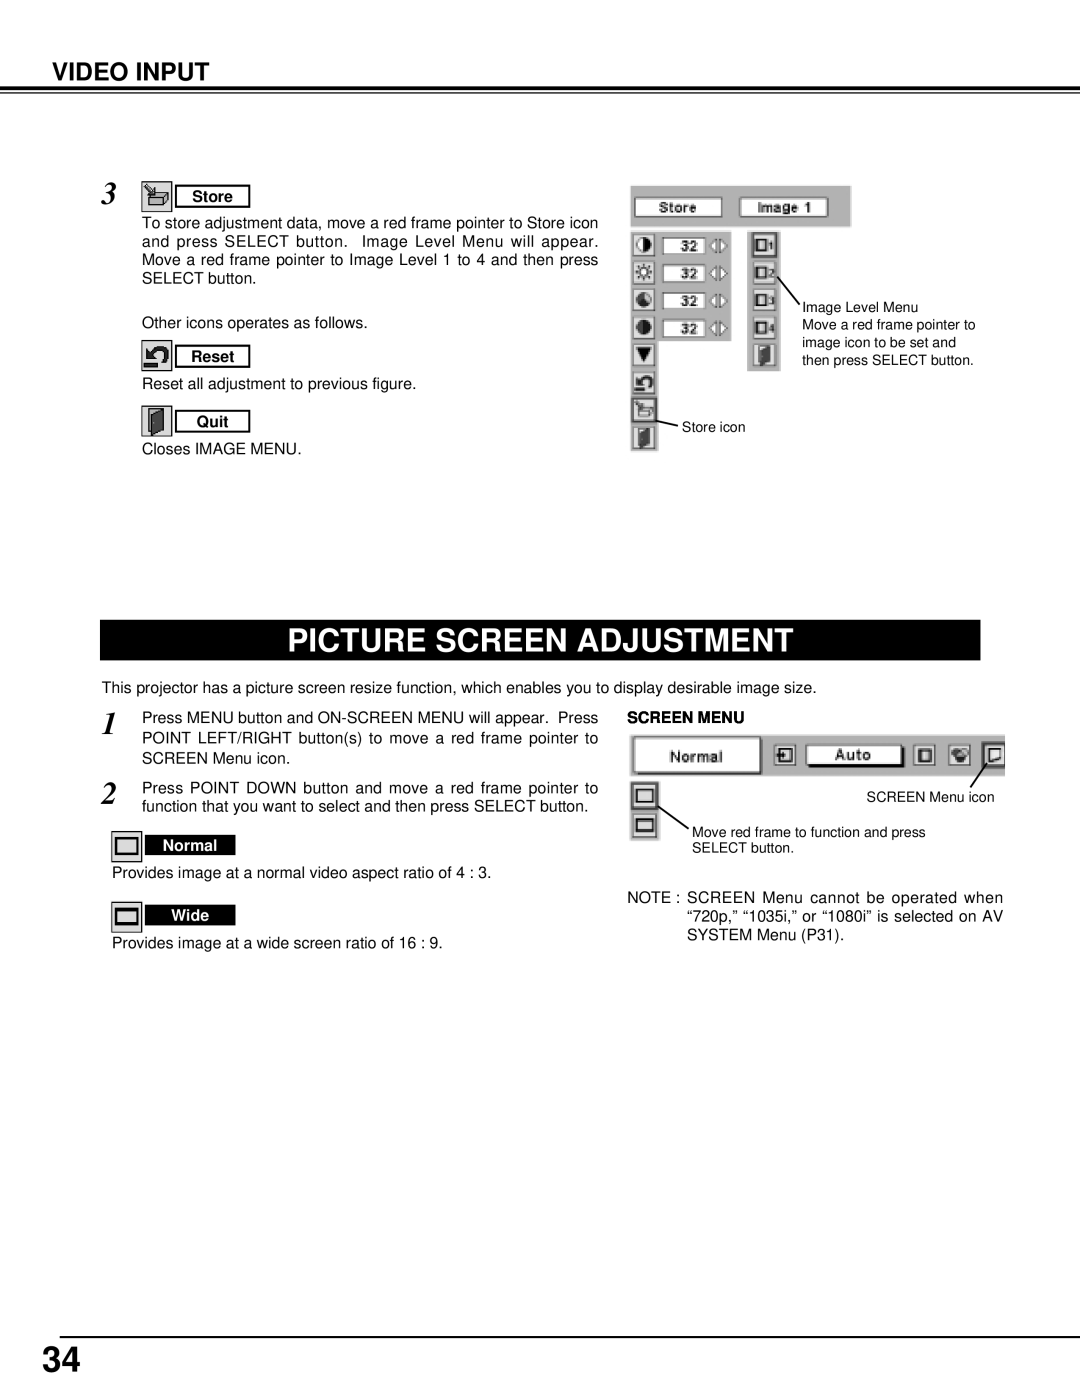 BOXLIGHT MP-41T manual Picture Screen Adjustment, Video Input, Store, Reset, Quit, Screen Menu 